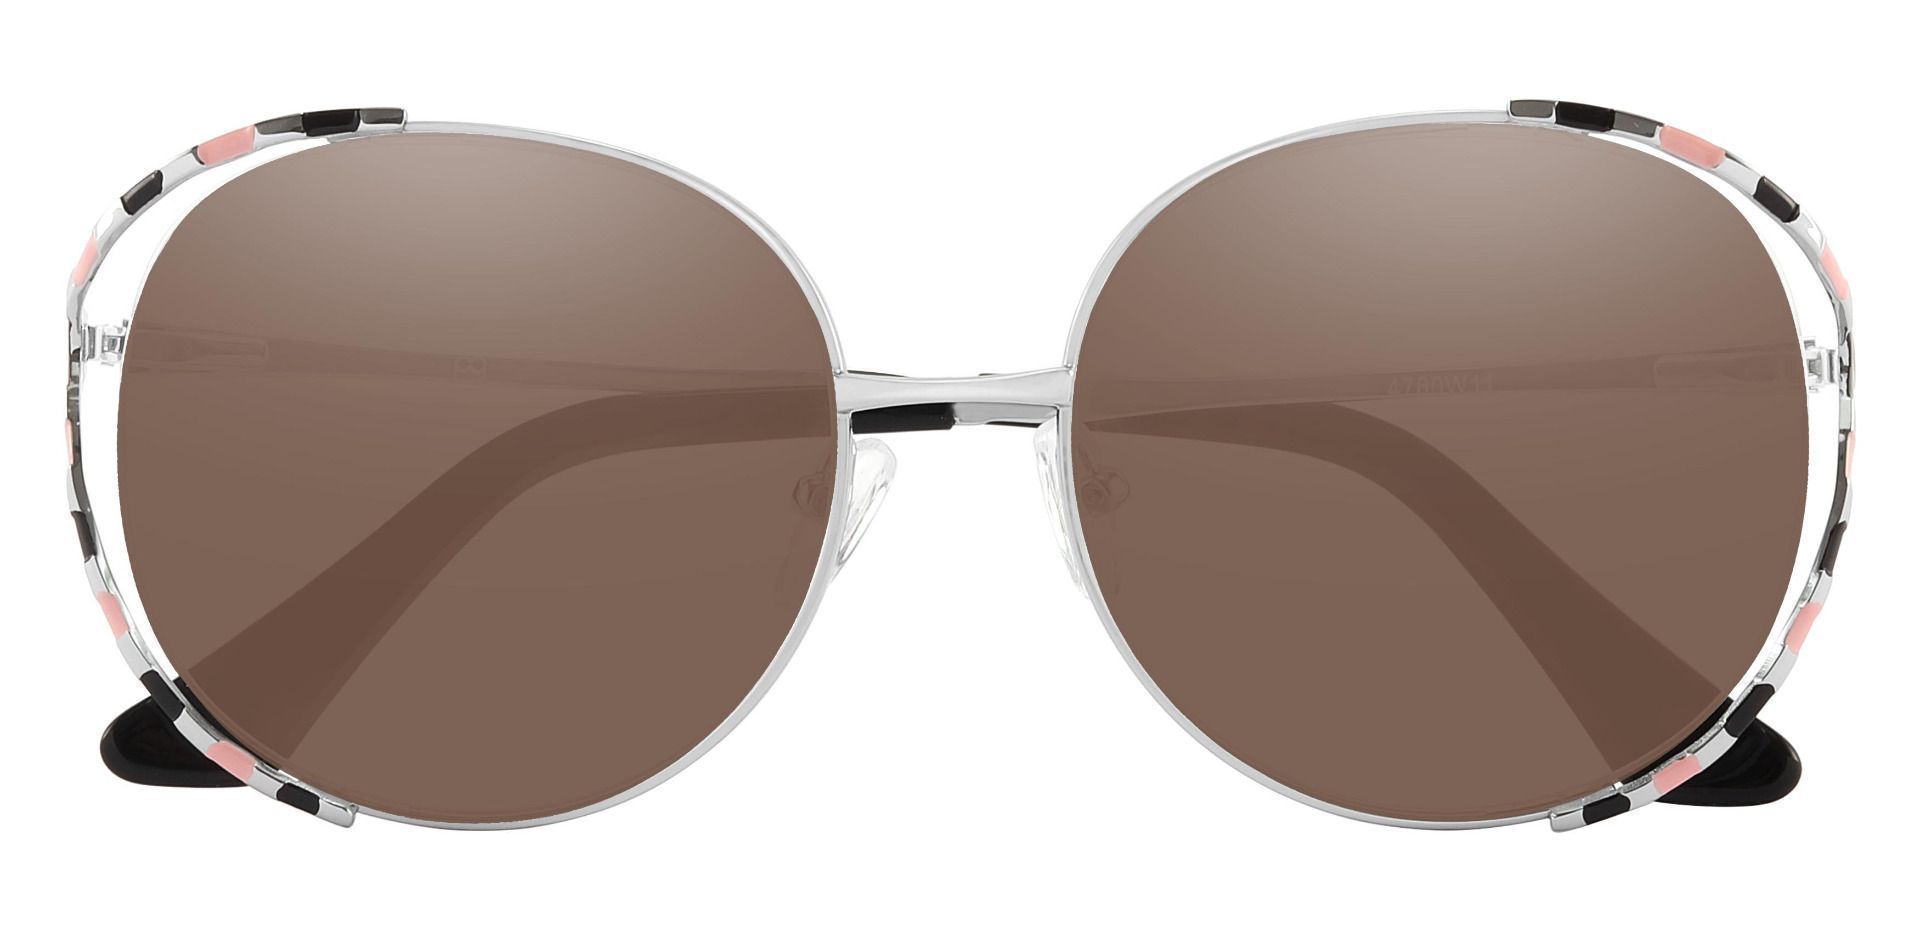 Dorothy Oval Prescription Sunglasses - Black Frame With Brown Lenses